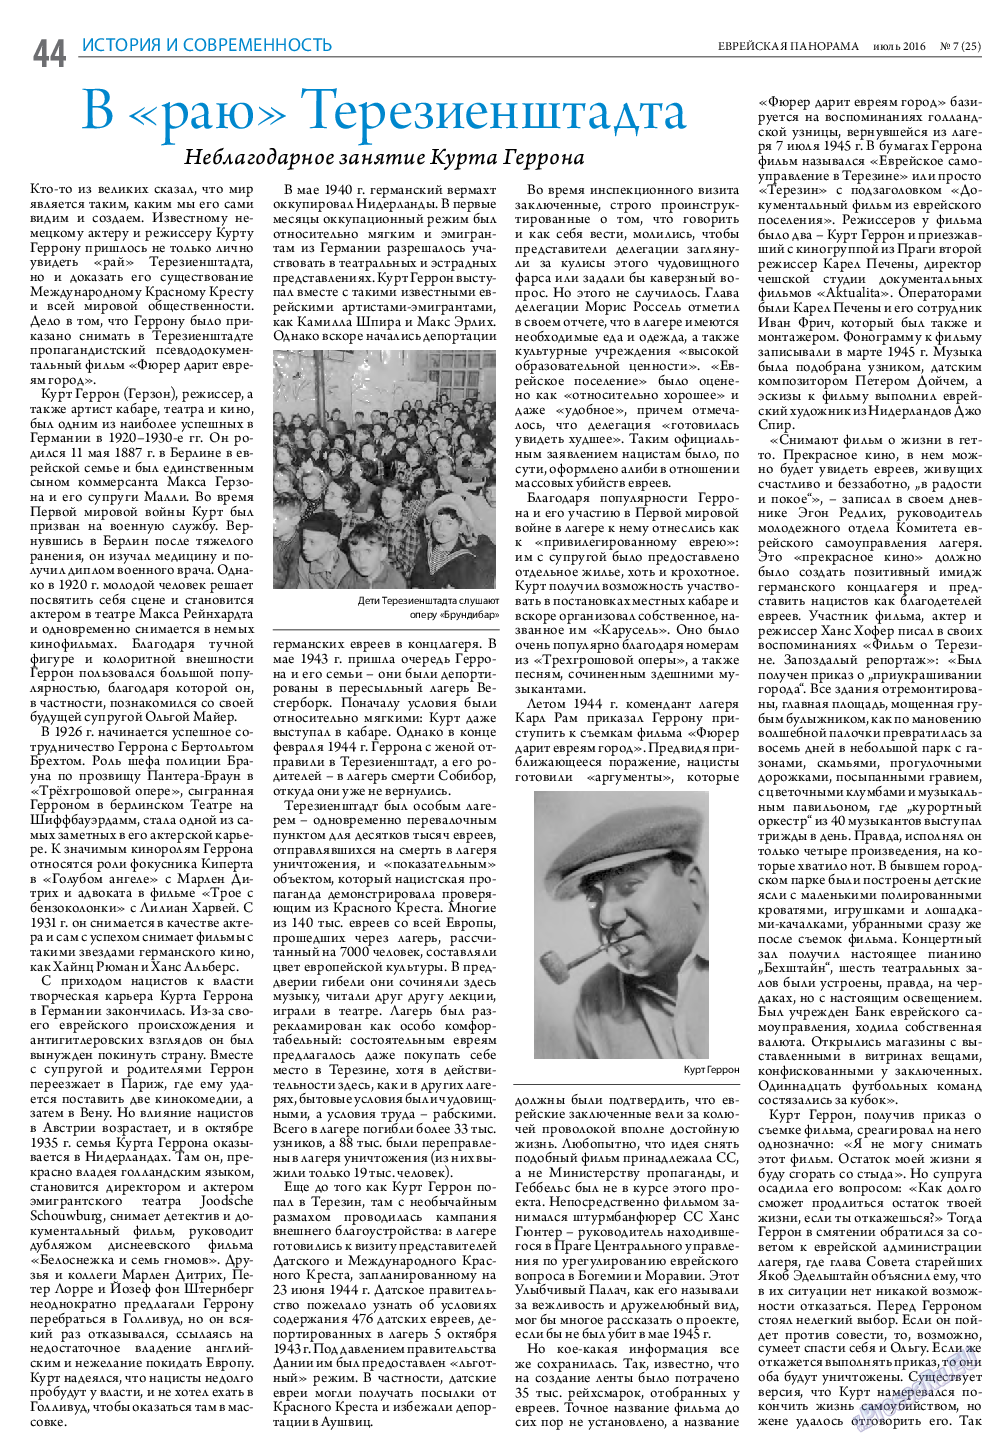 Еврейская панорама, газета. 2016 №7 стр.44